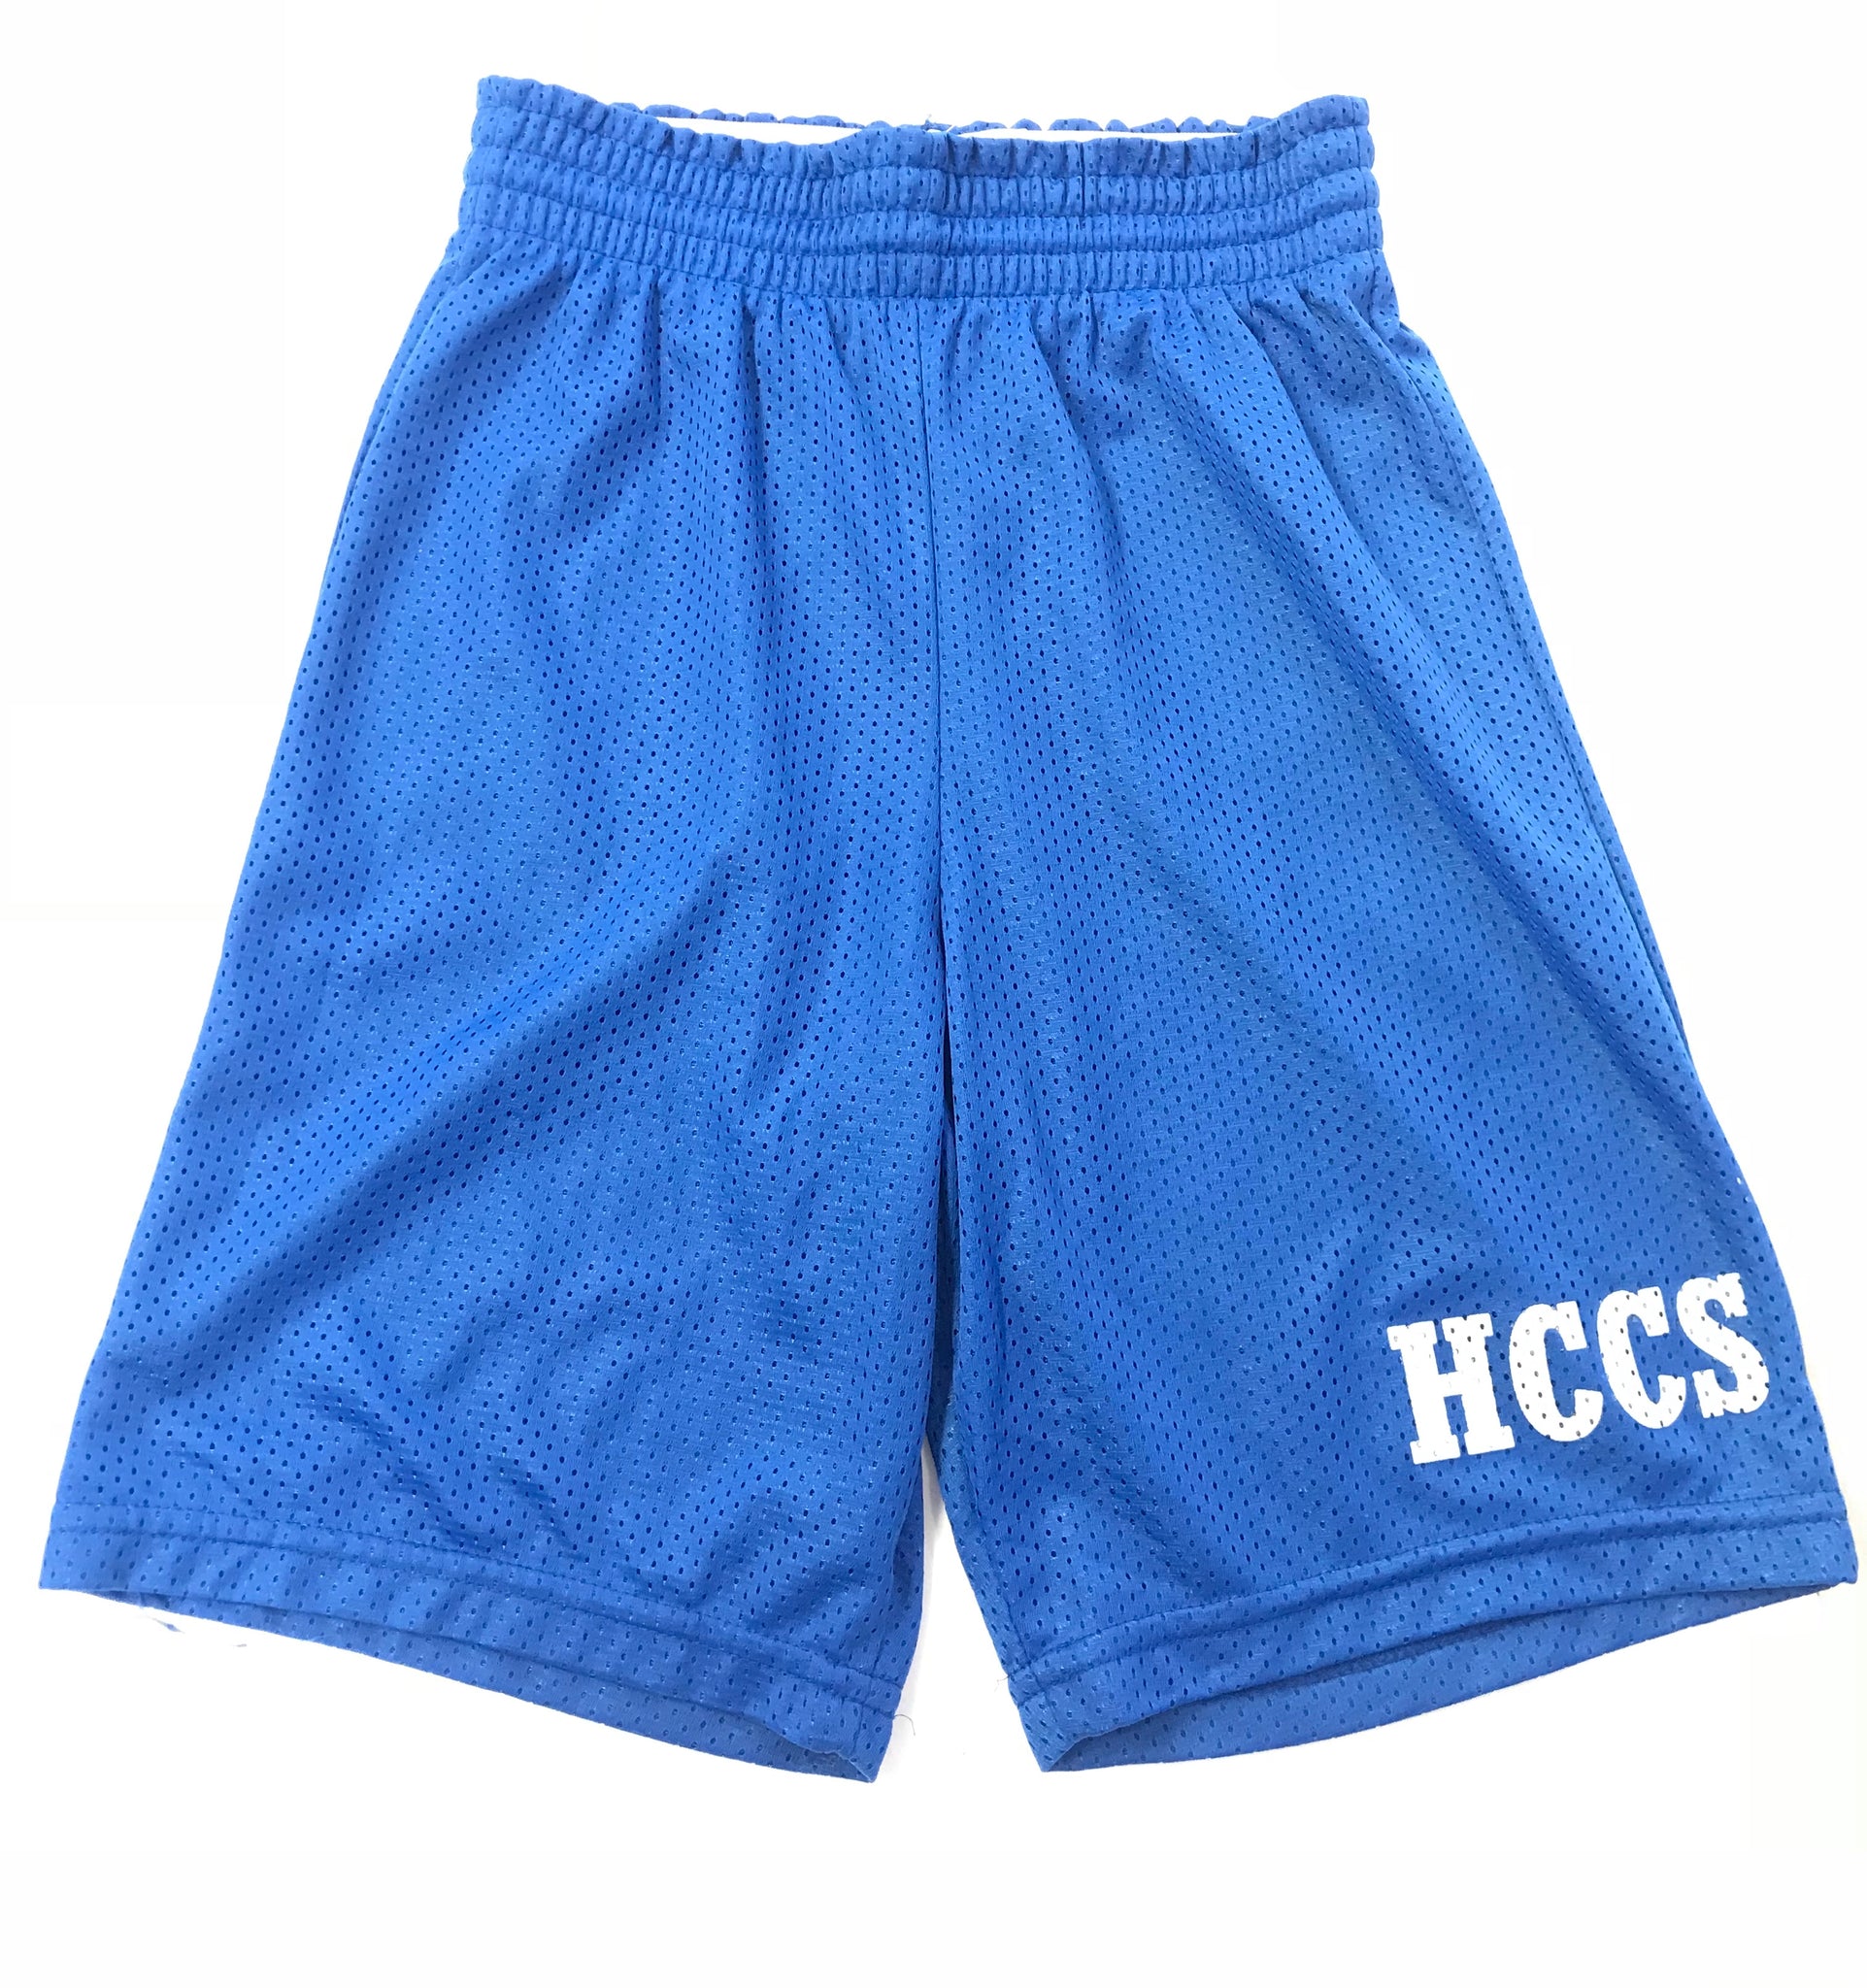 HCCS Royal Blue Gym Shorts